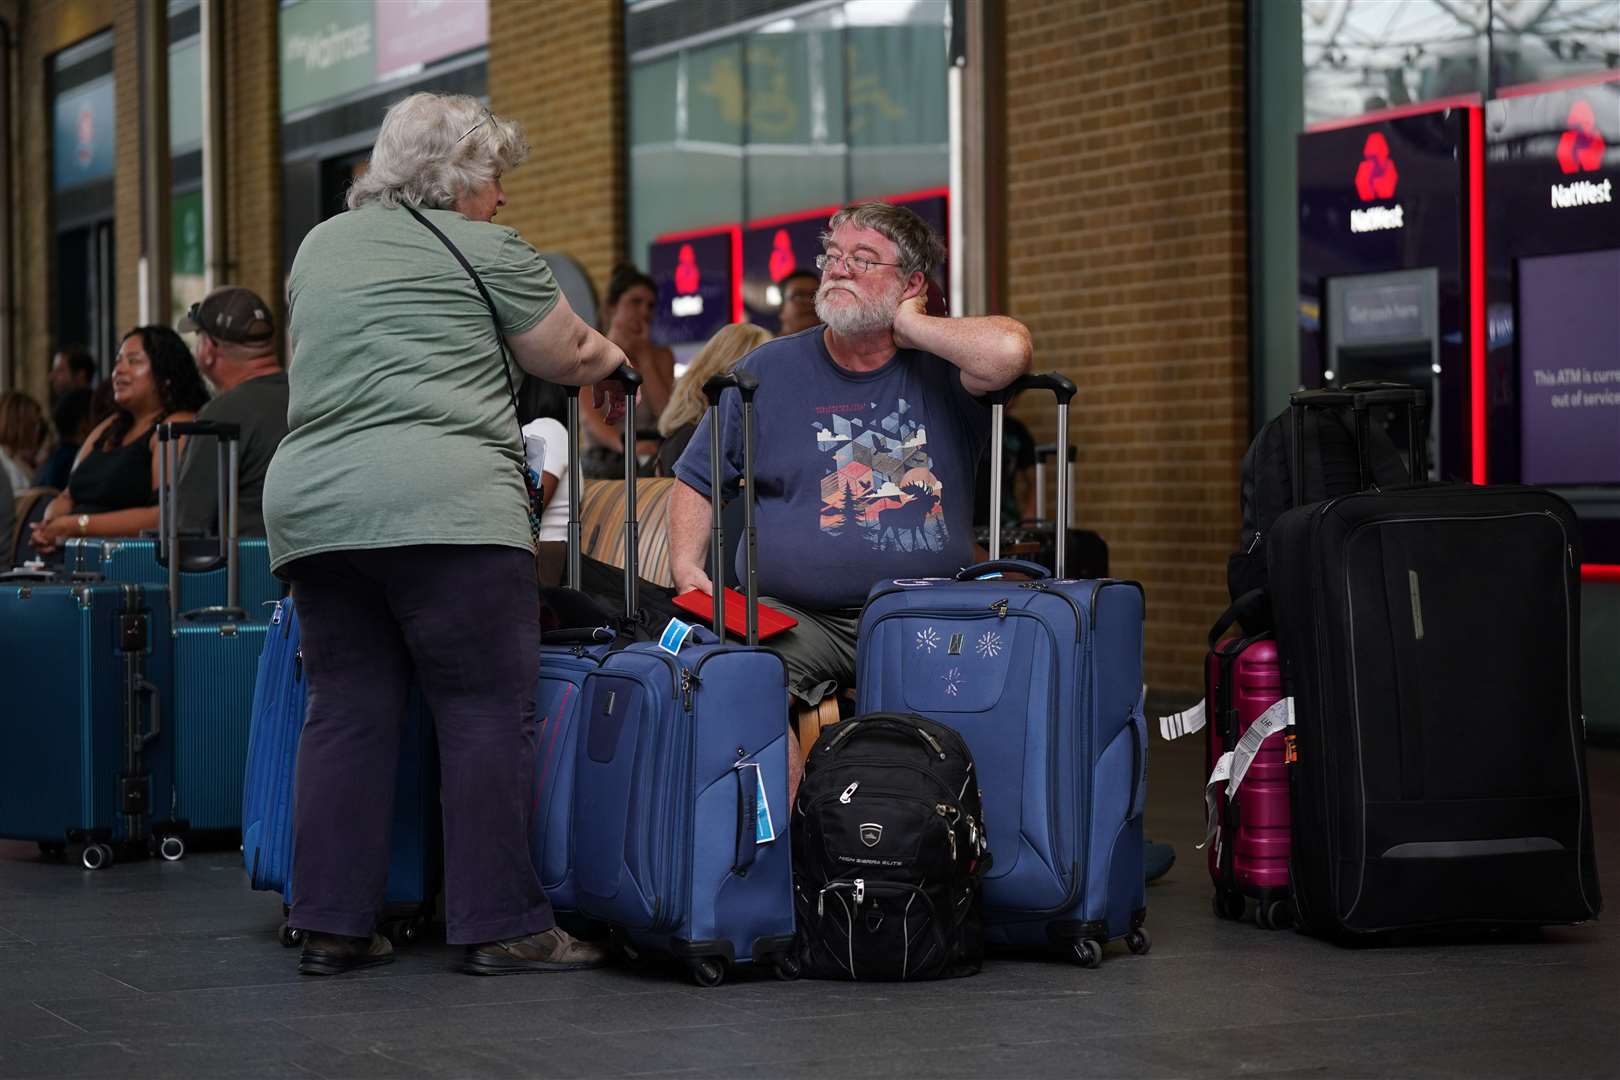 Passengers waiting at King’s Cross station in London (Yui Mok/PA)